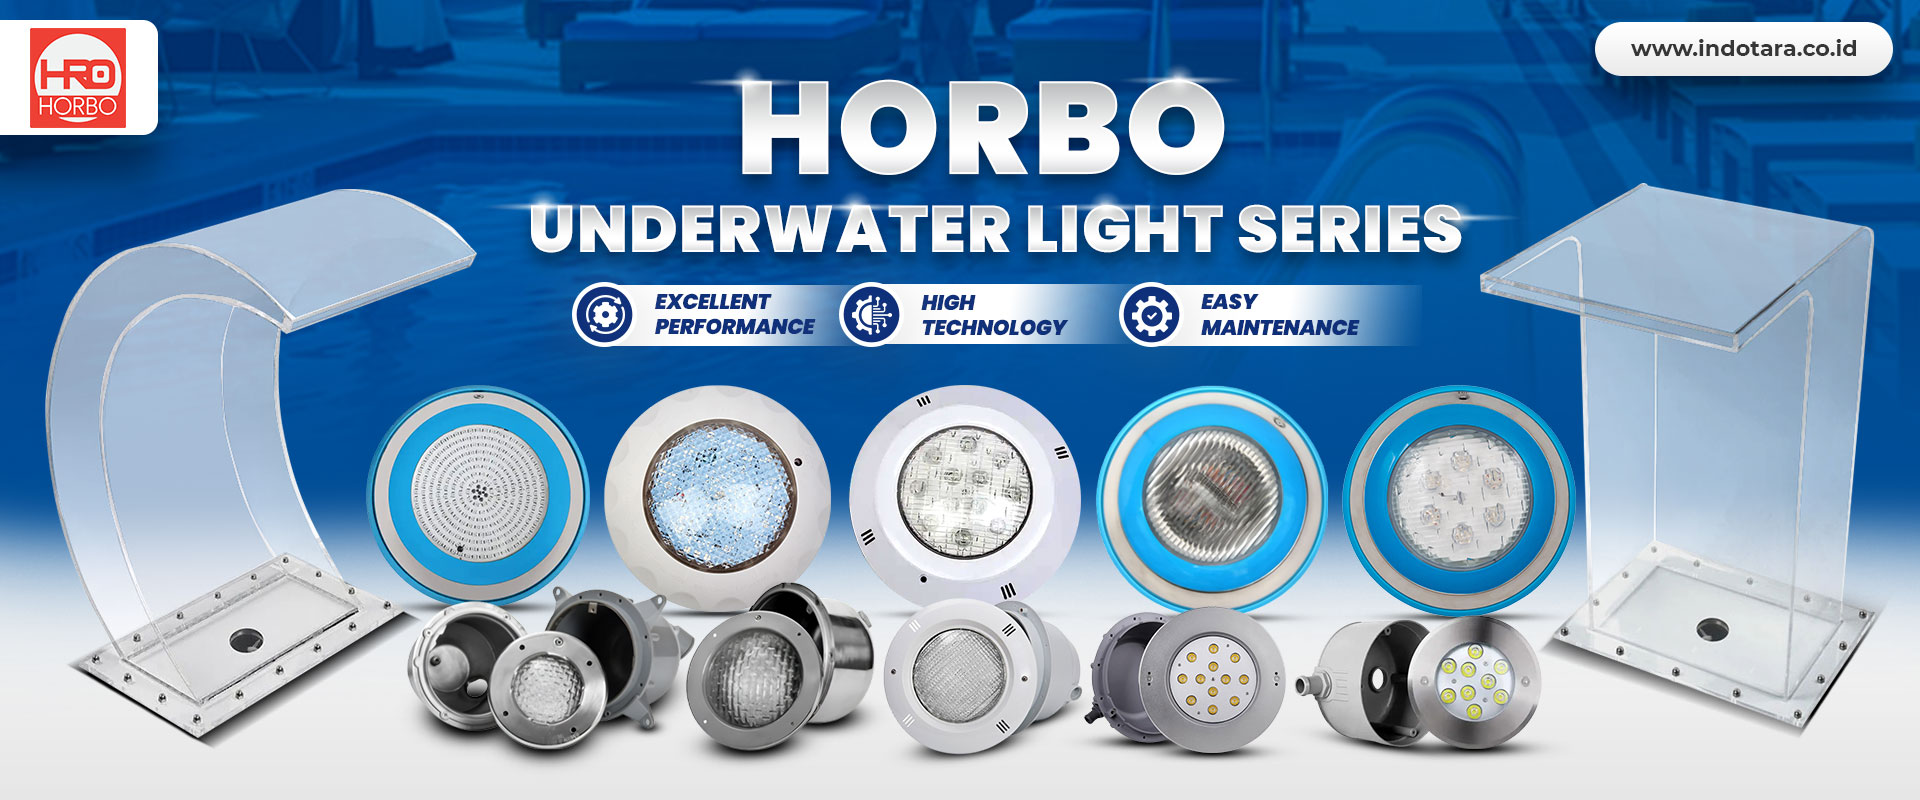 Horbo Underwater Light Series